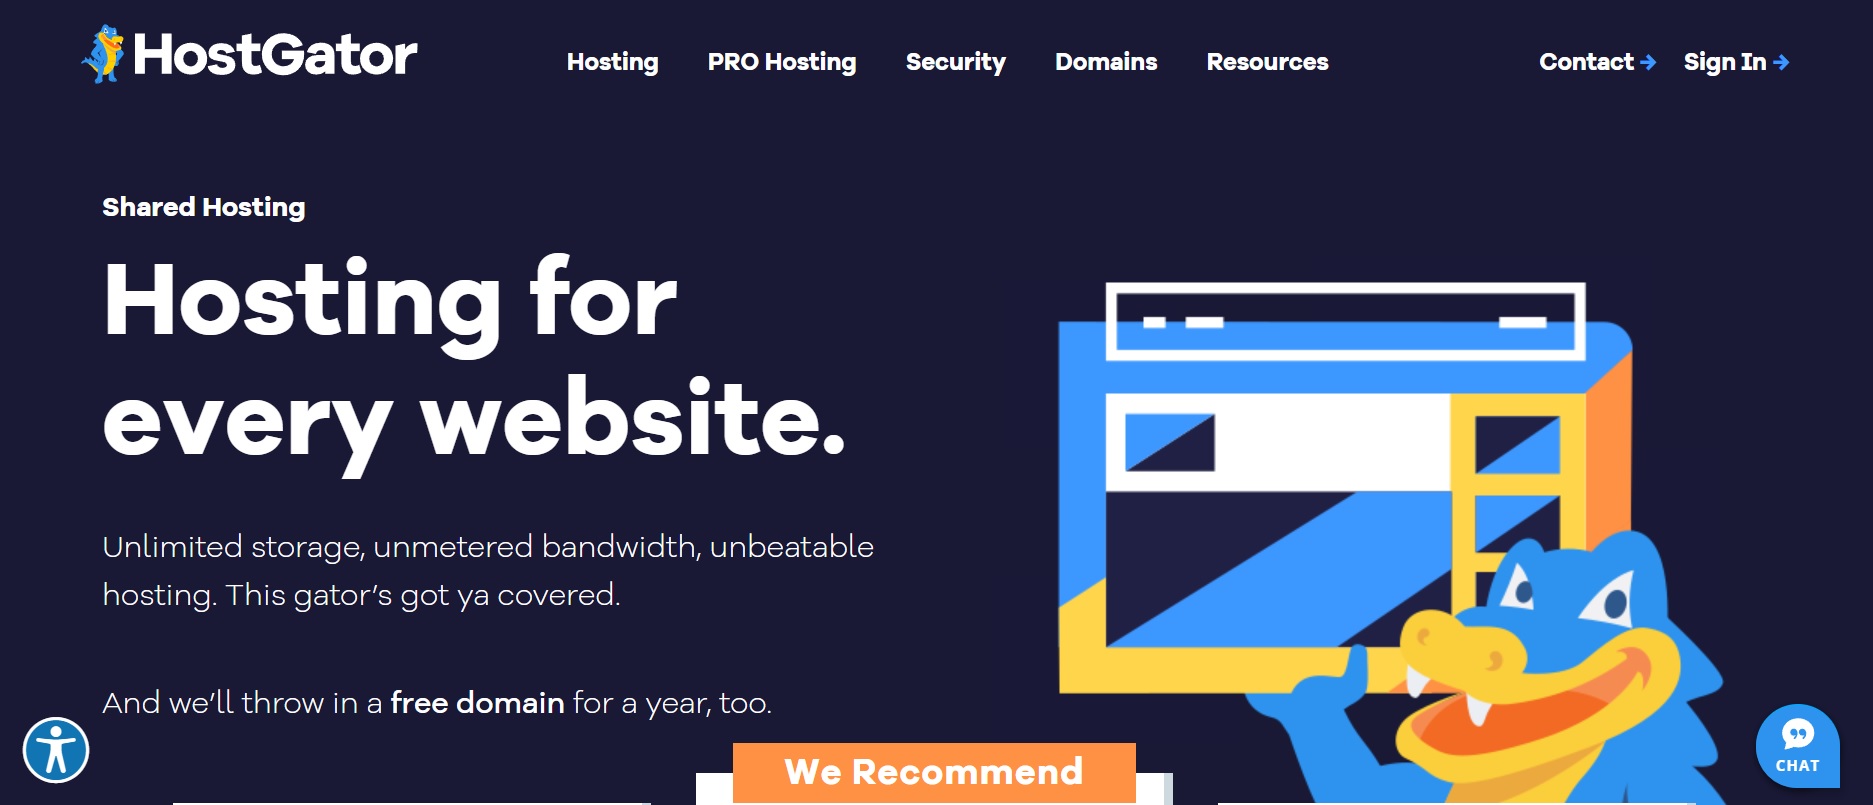 HostGator - website hosting provider